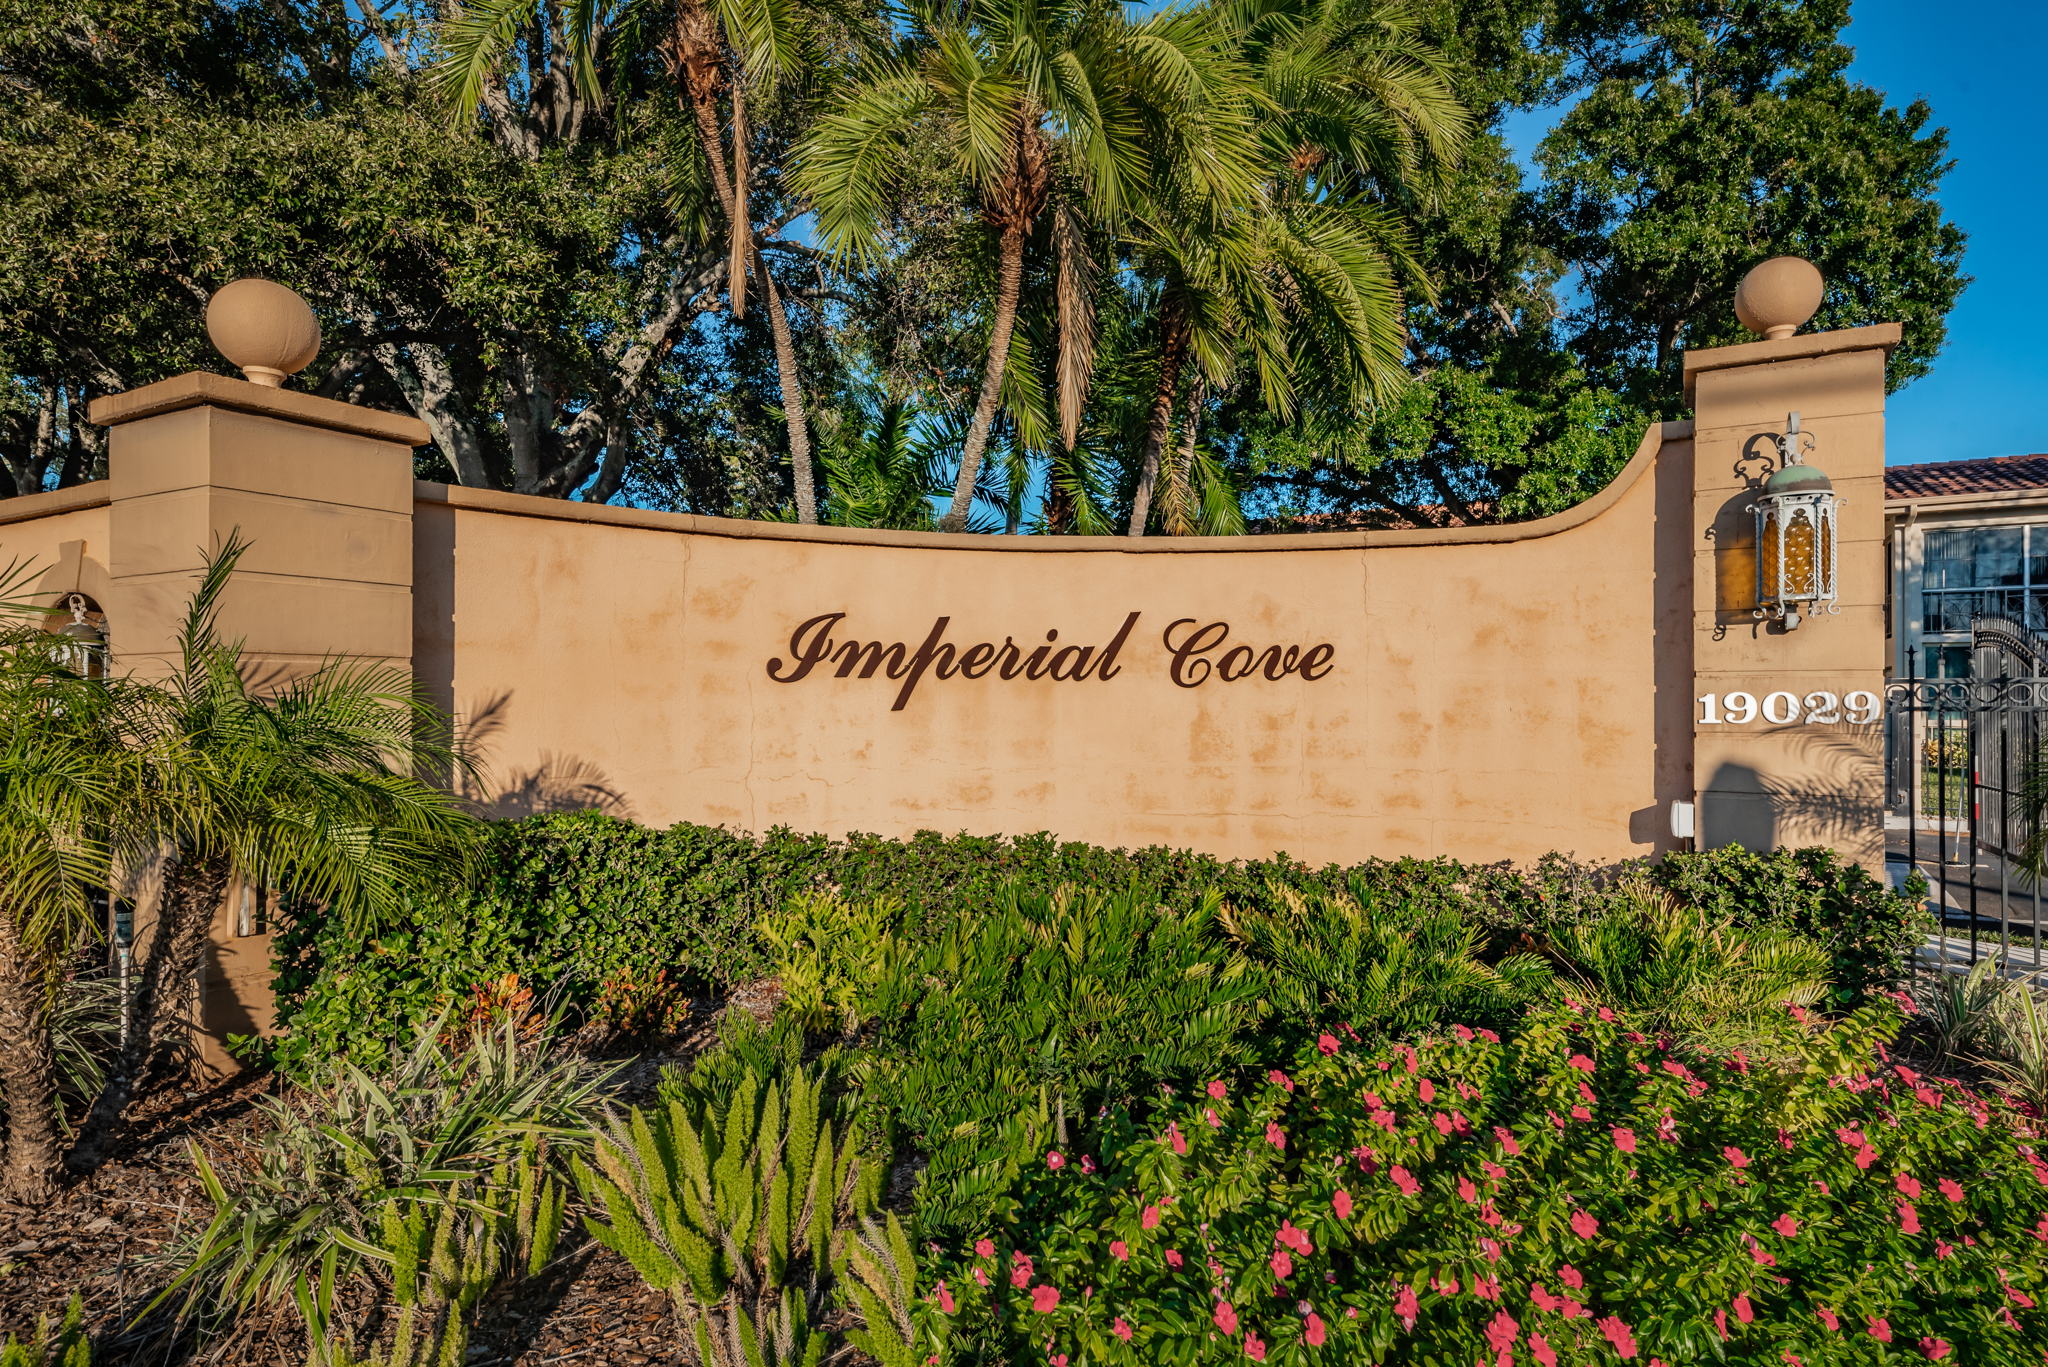 1-Imperial Cove